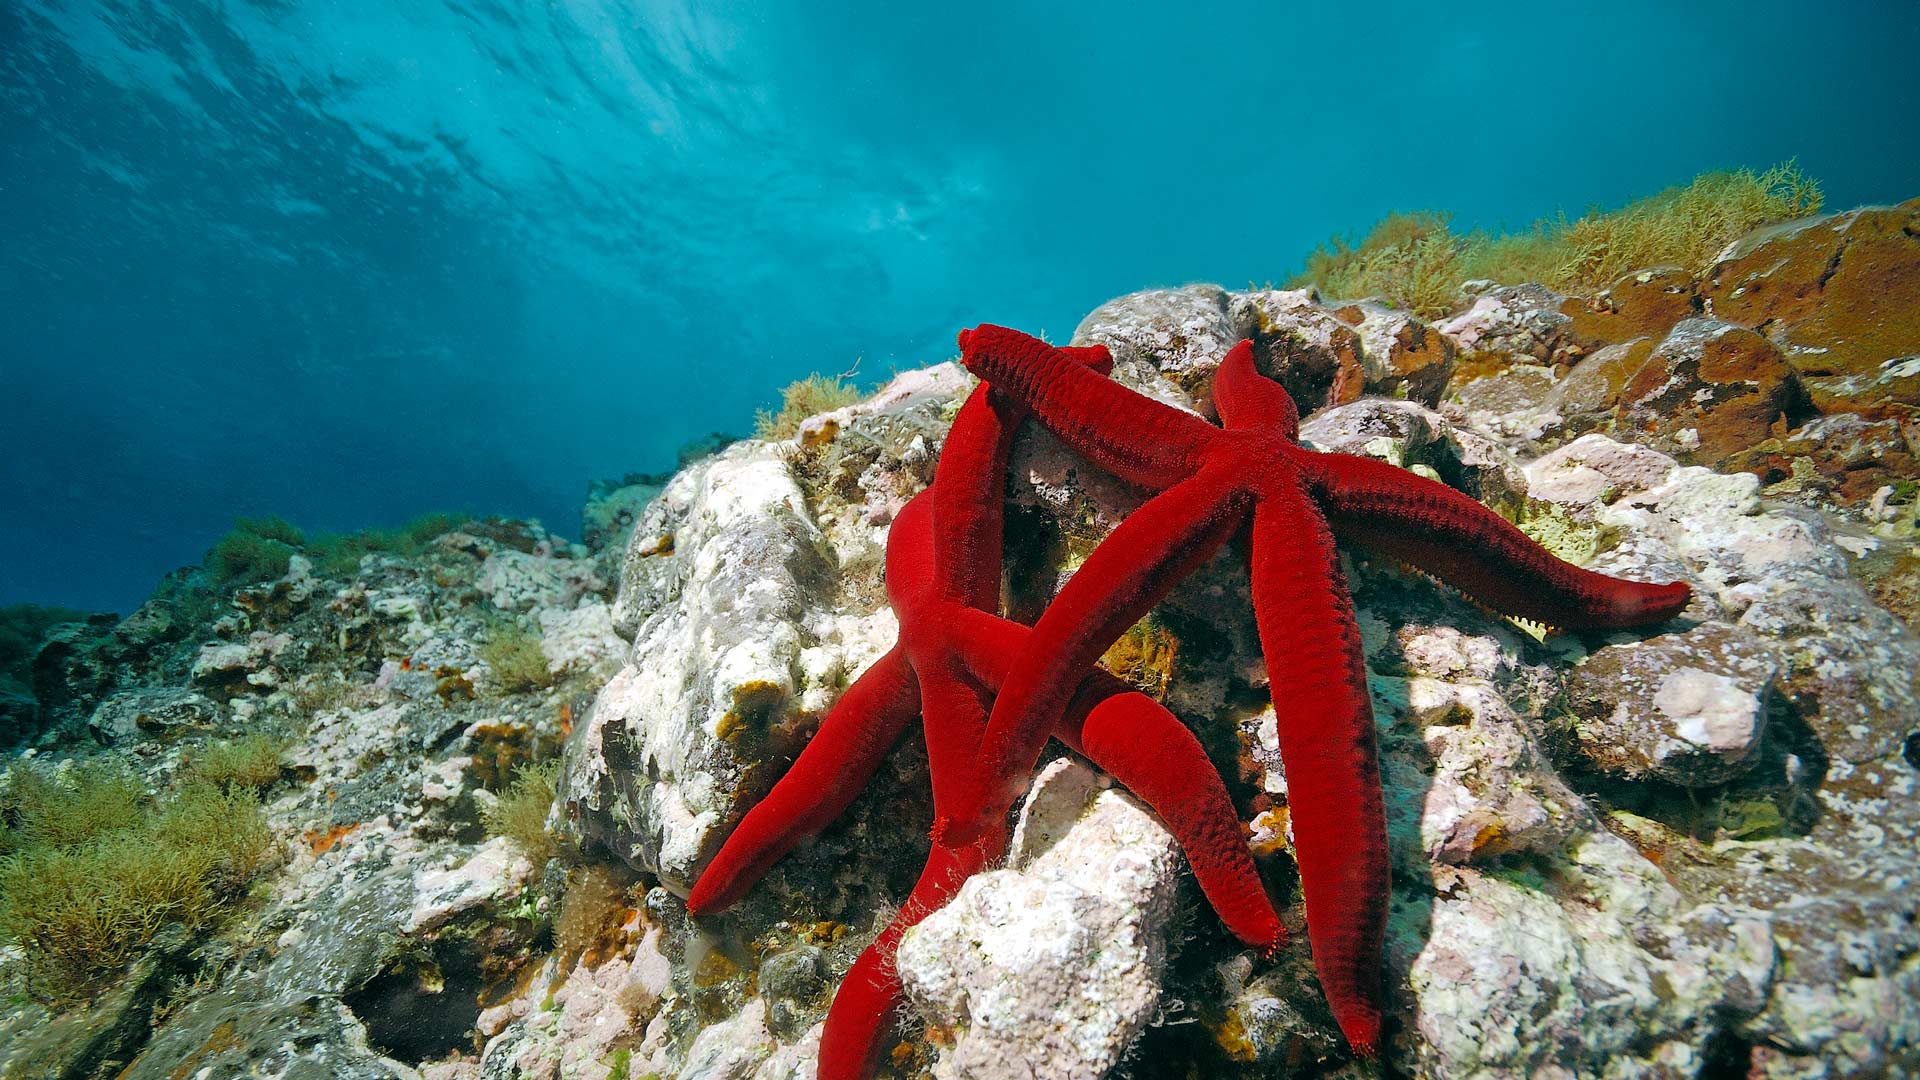 Mediterranean red sea stars